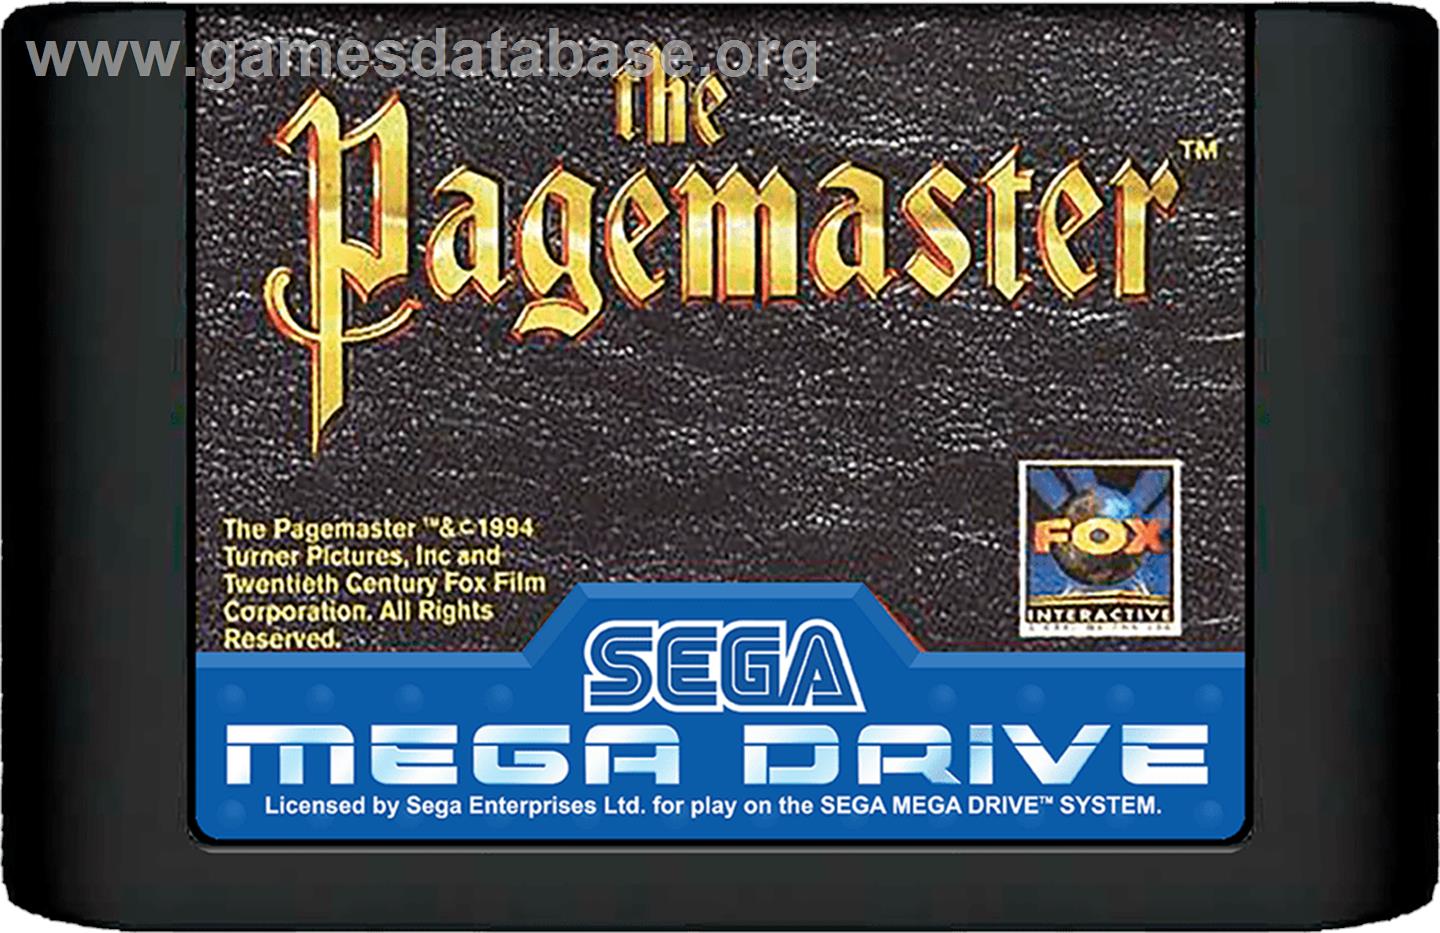 Pagemaster, The - Sega Genesis - Artwork - Cartridge